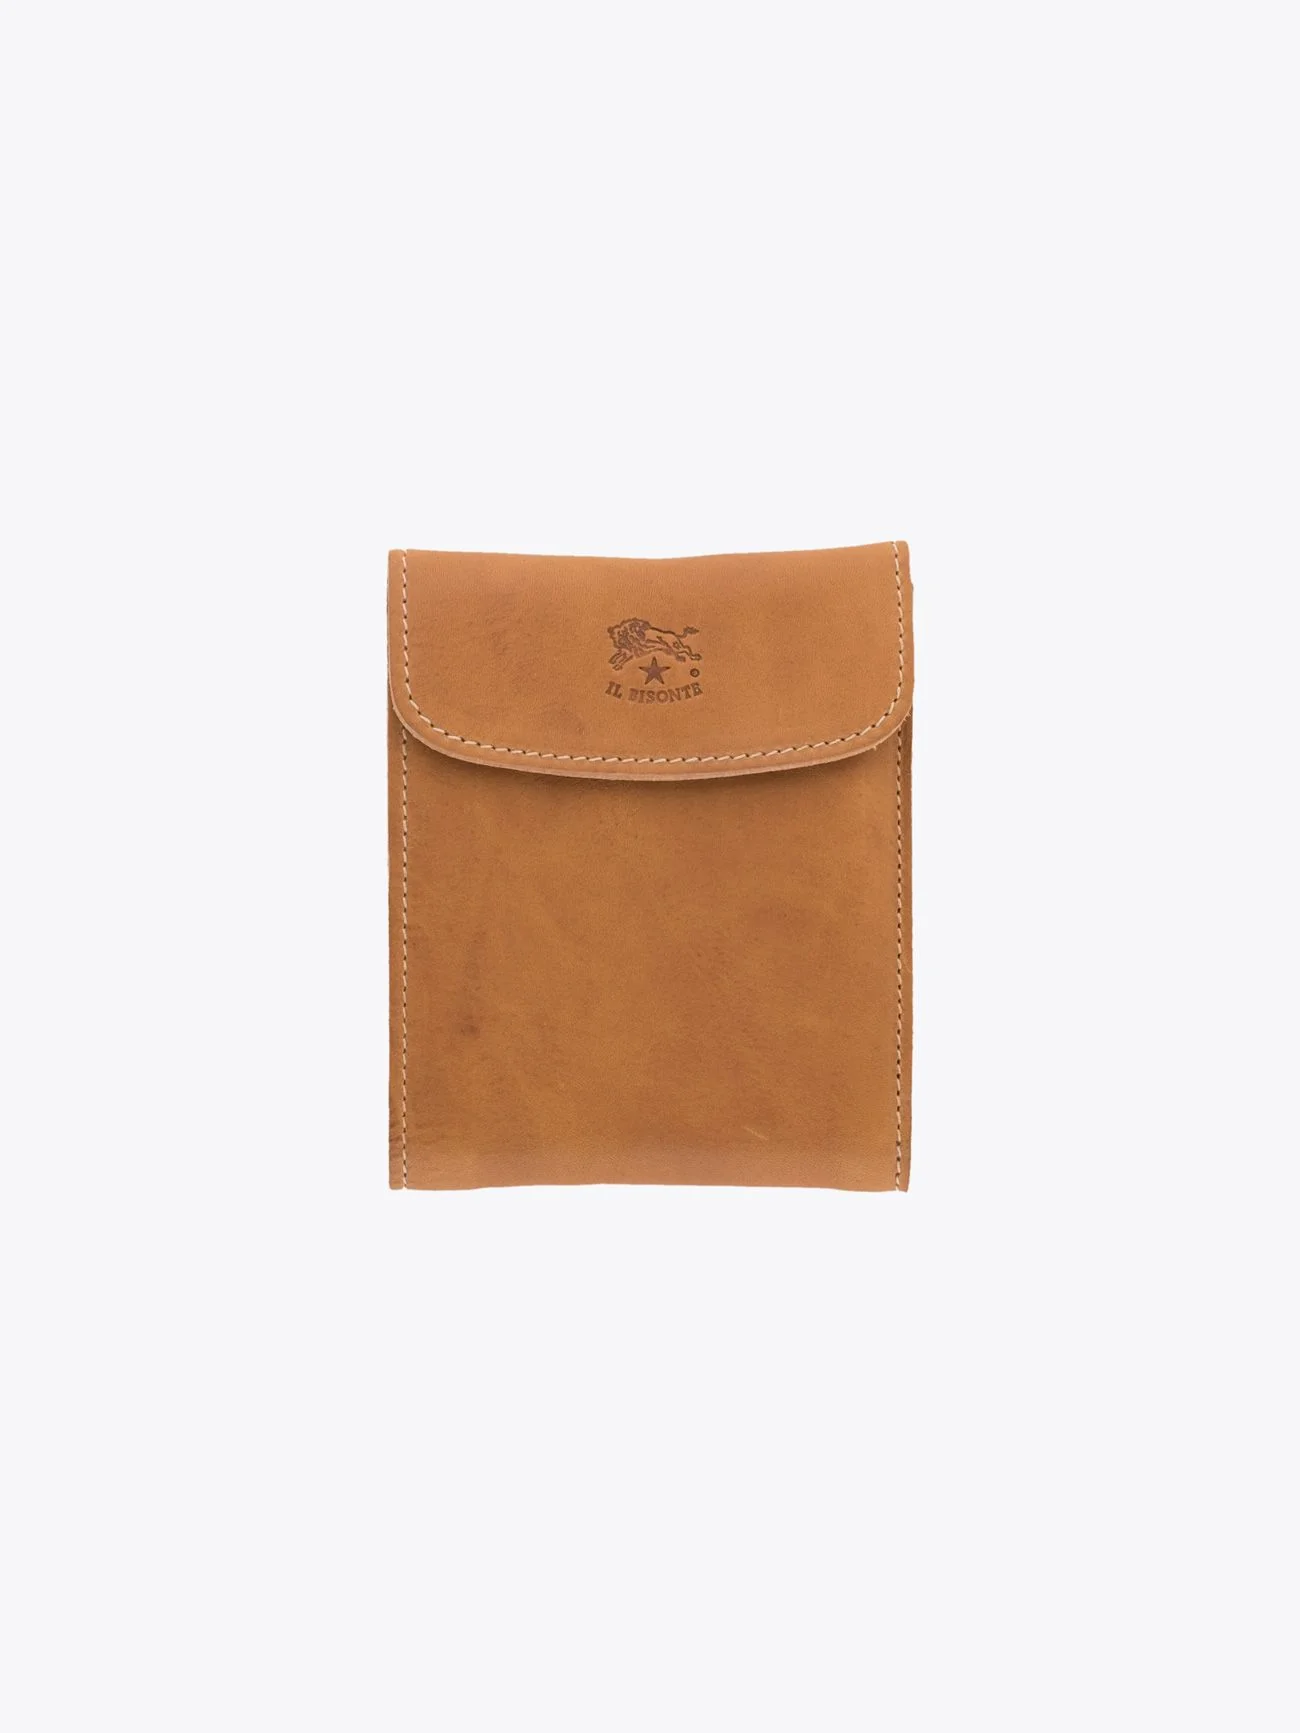 Il Bisonte Men's Leather Wallet C0976 - Save 30%